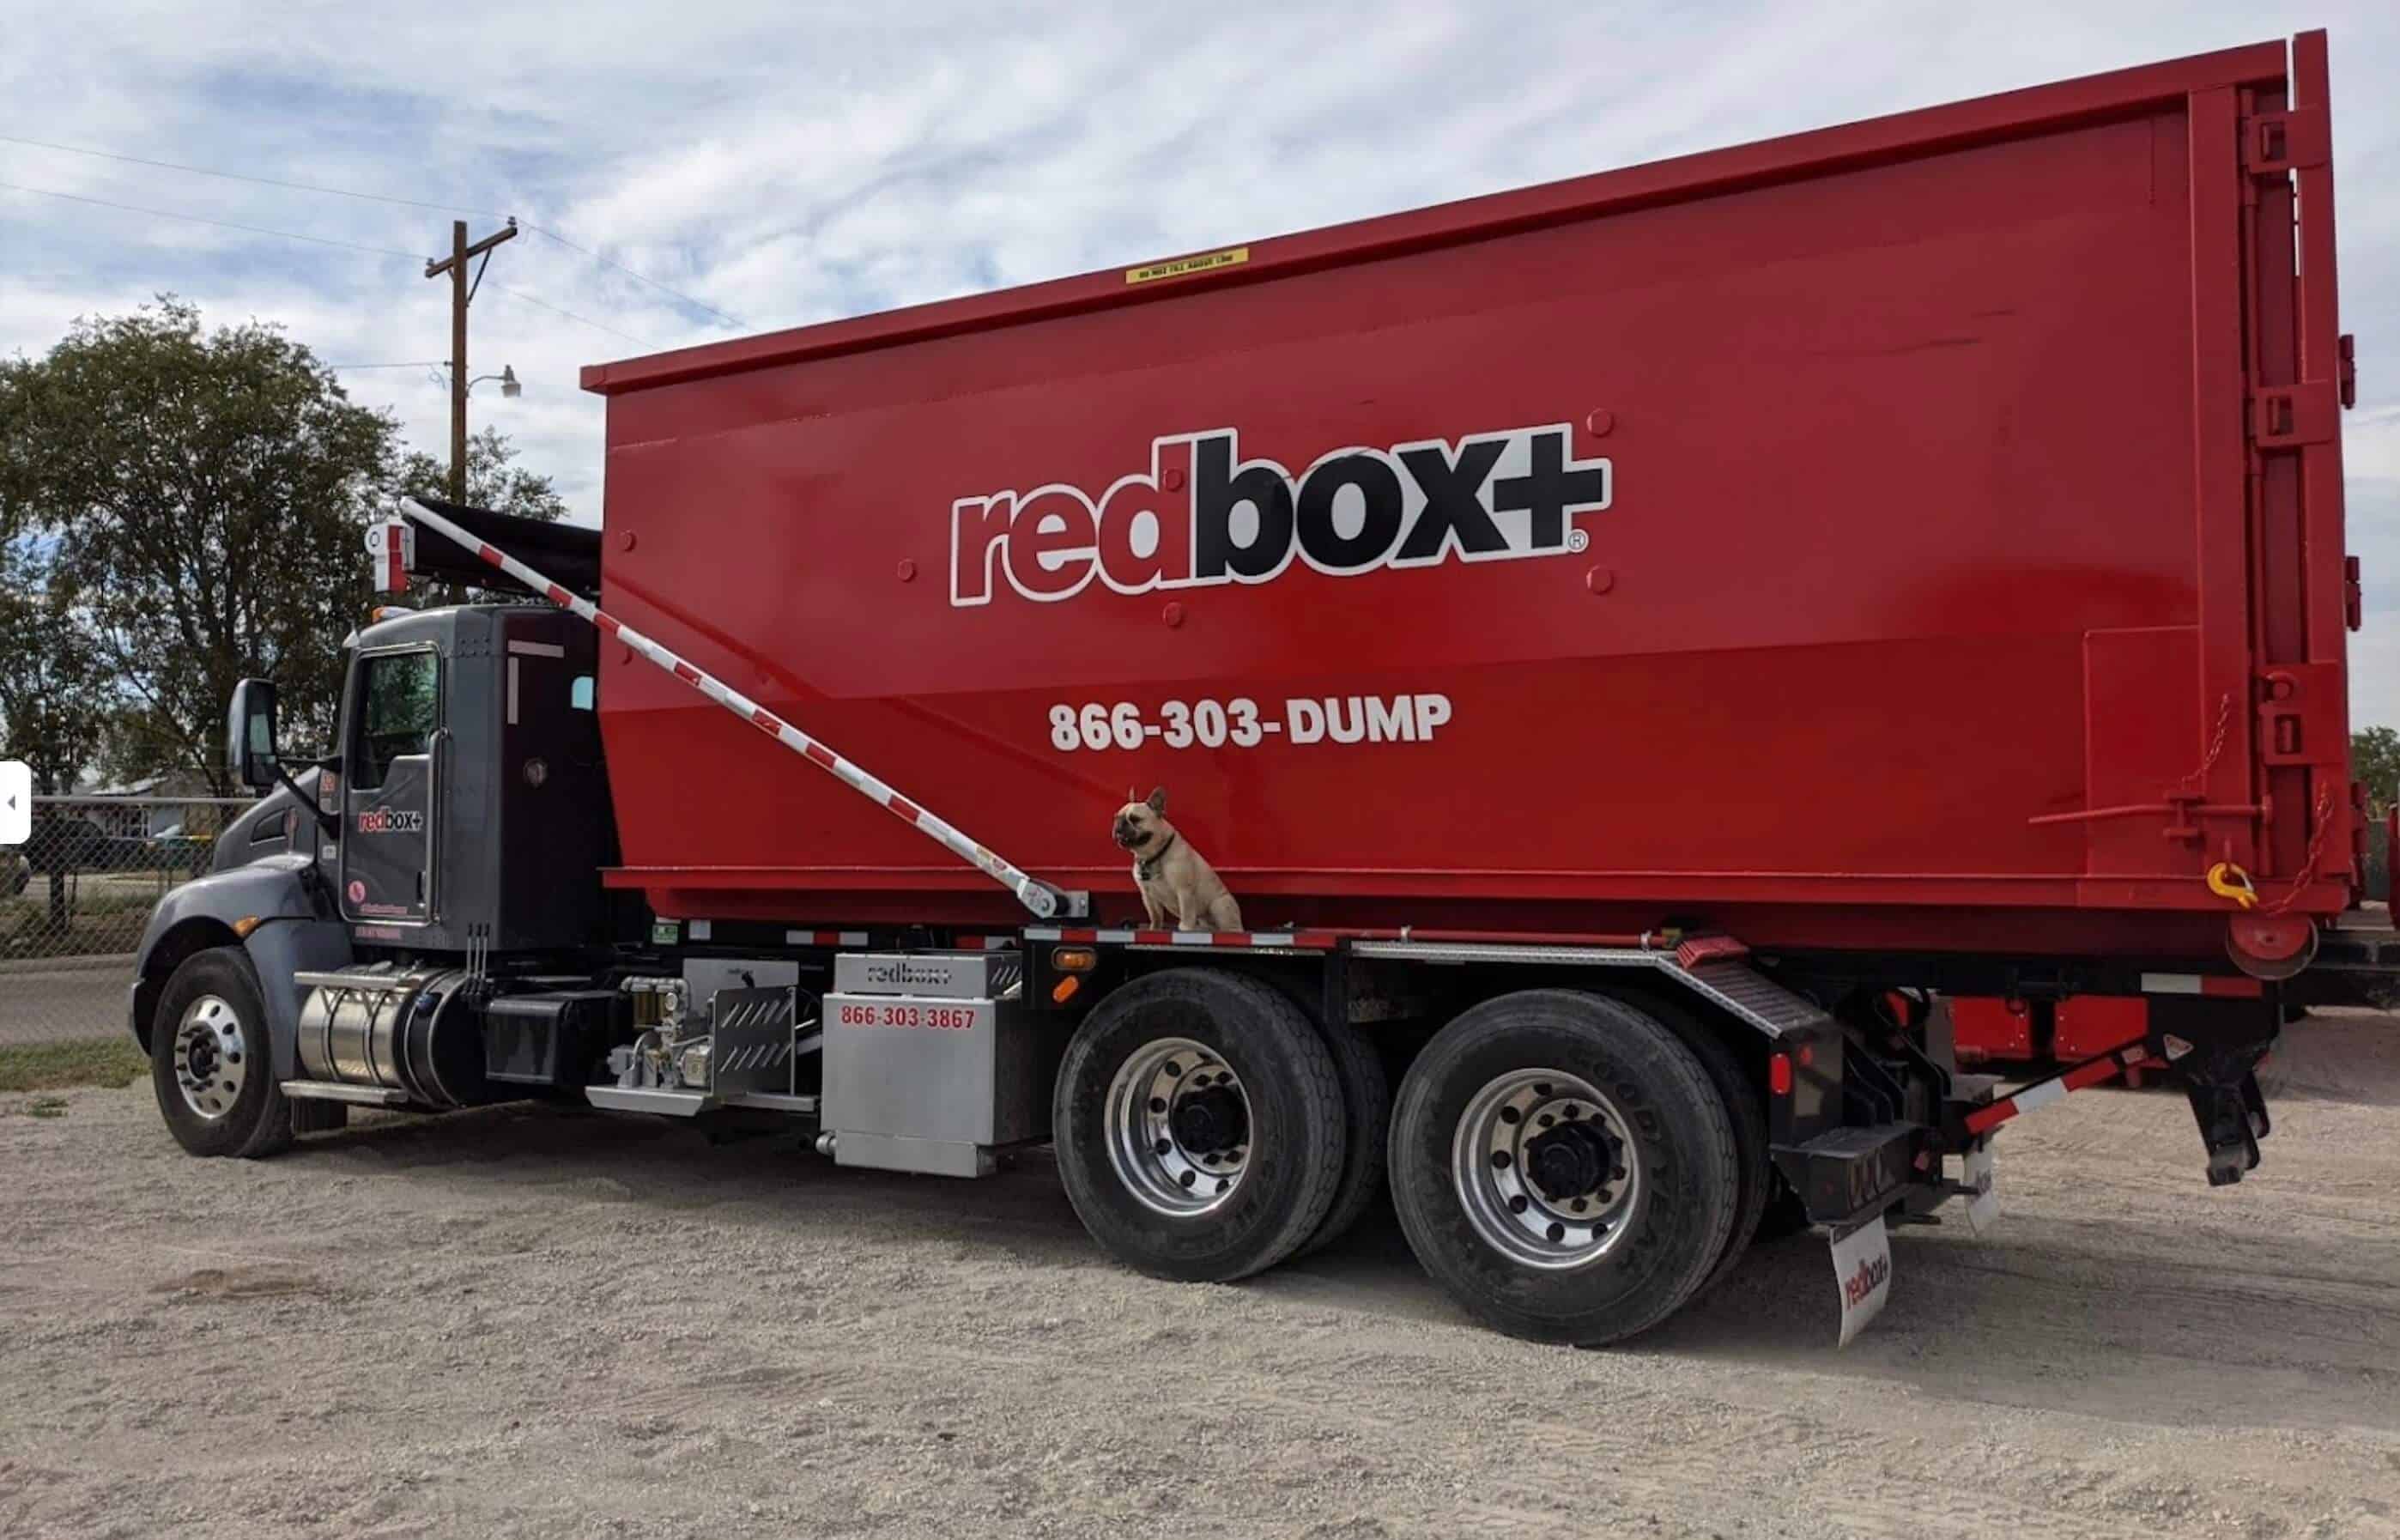 redbox+ Dumpsters 40-yard Standard dumpster in fort collins colorado